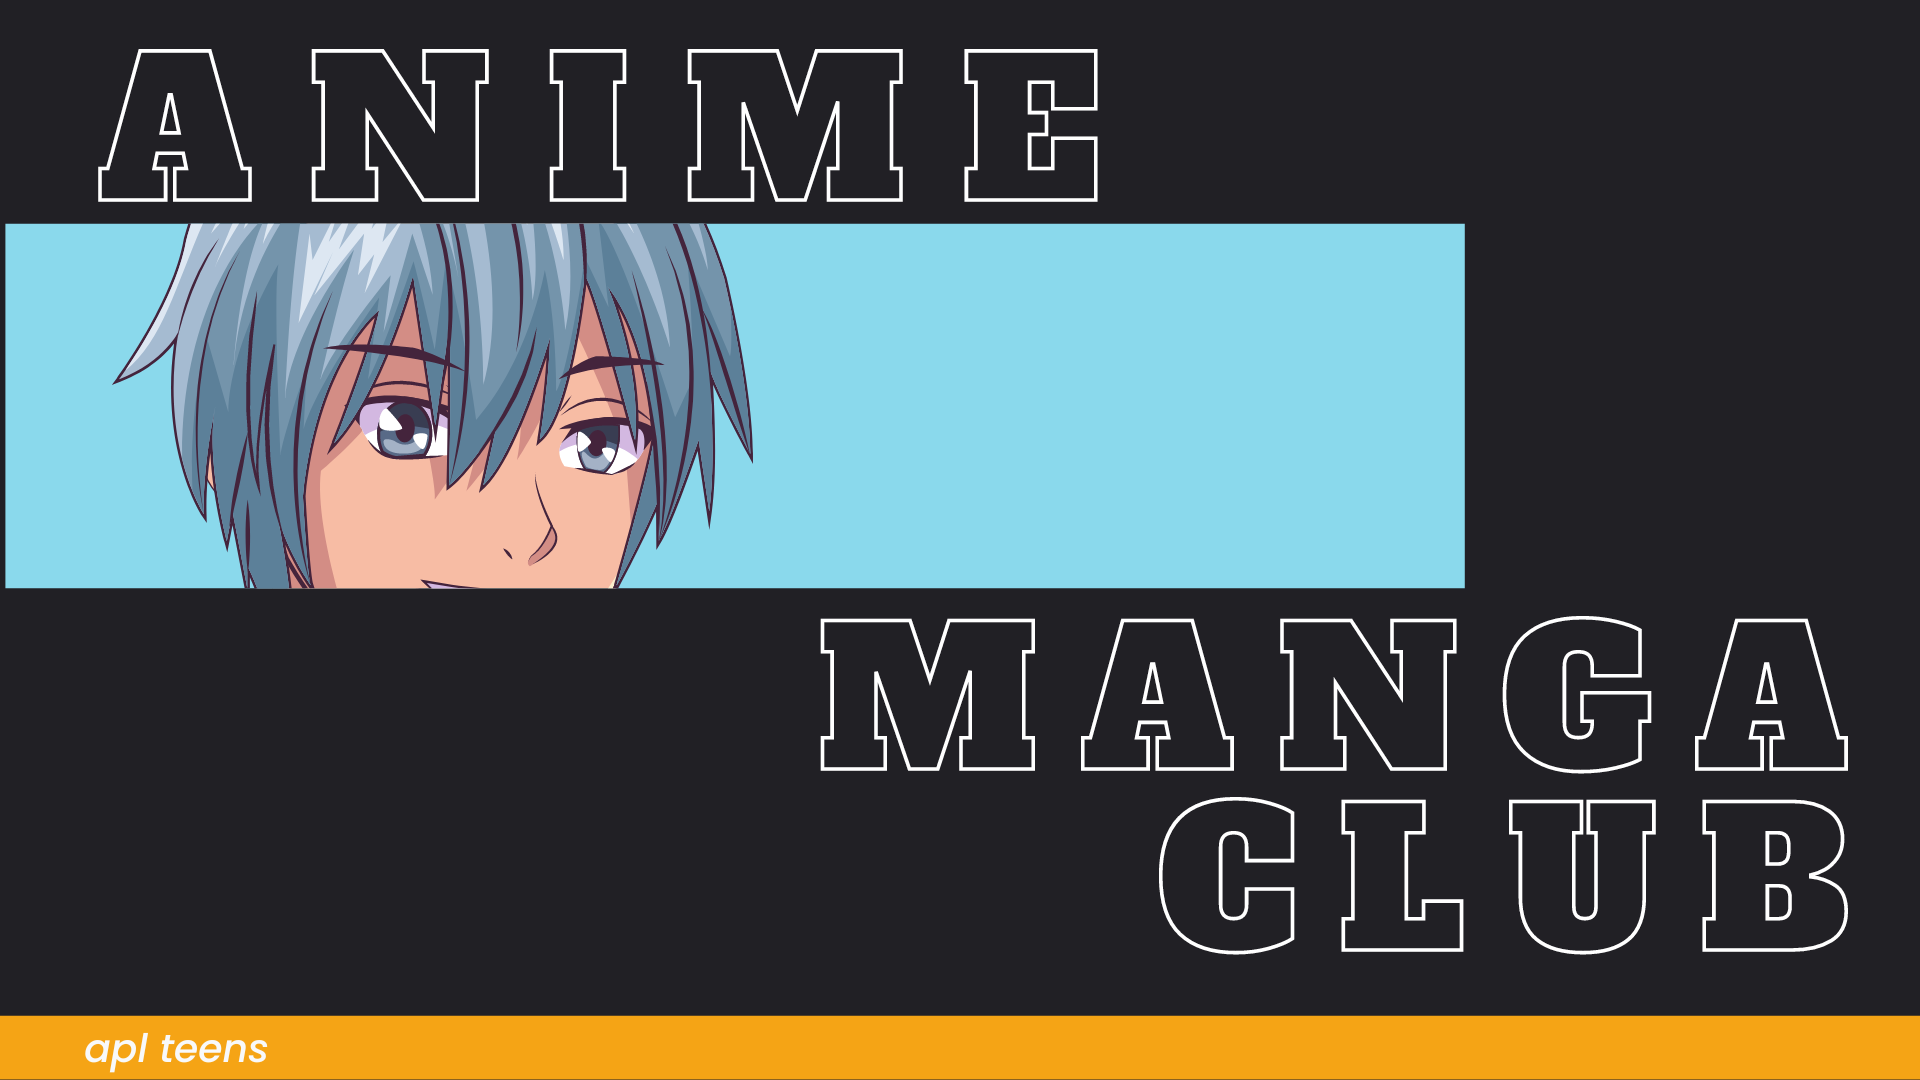 Anime and Manga Club with Boy with Blue Hair